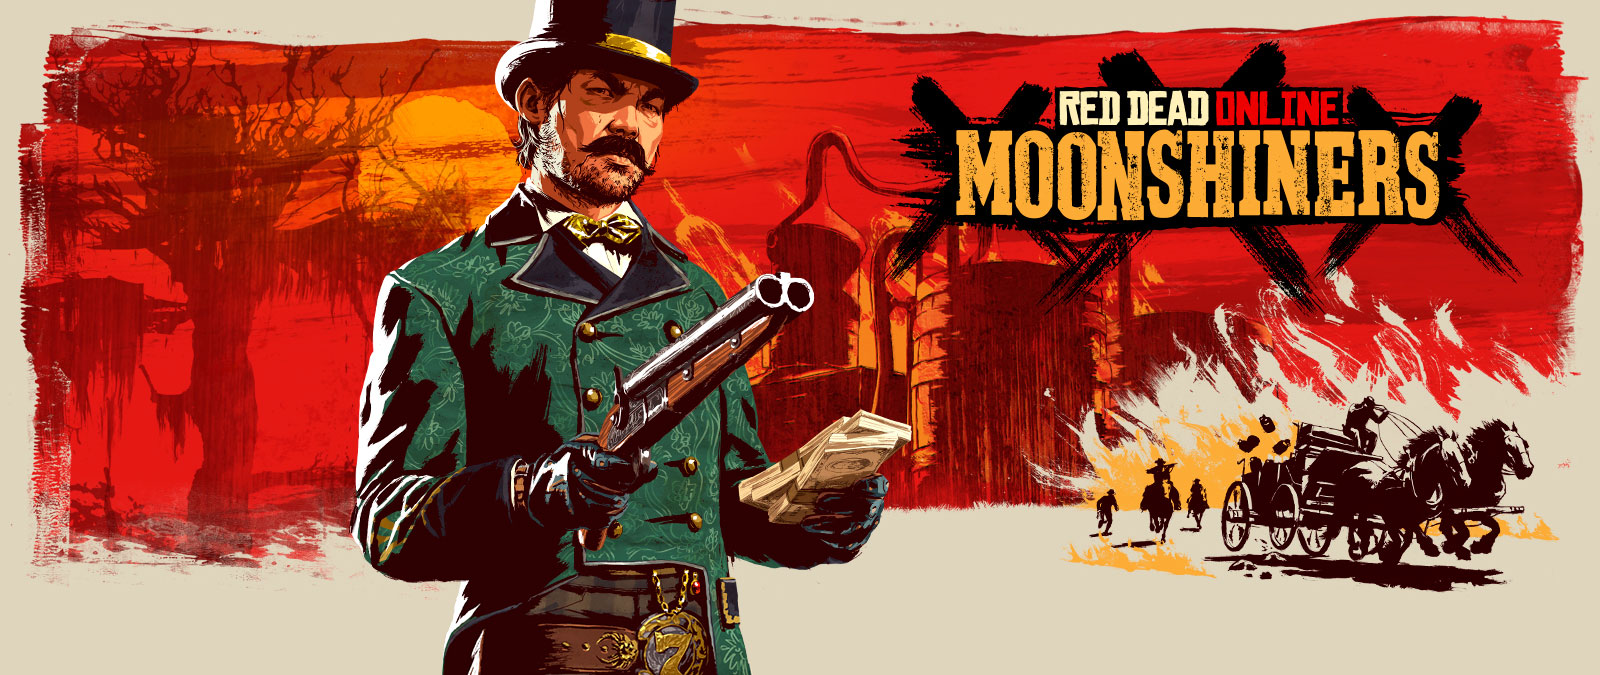 Red Dead Online, Moonshiners, Ένας περίεργος άνθρωπος που κρατά ένα όπλο και μια στοίβα από μετρητά, στυλιστικό φόντο μιας ρύθμισης moonshiner και ένα κυνηγητό με άμαξες. 